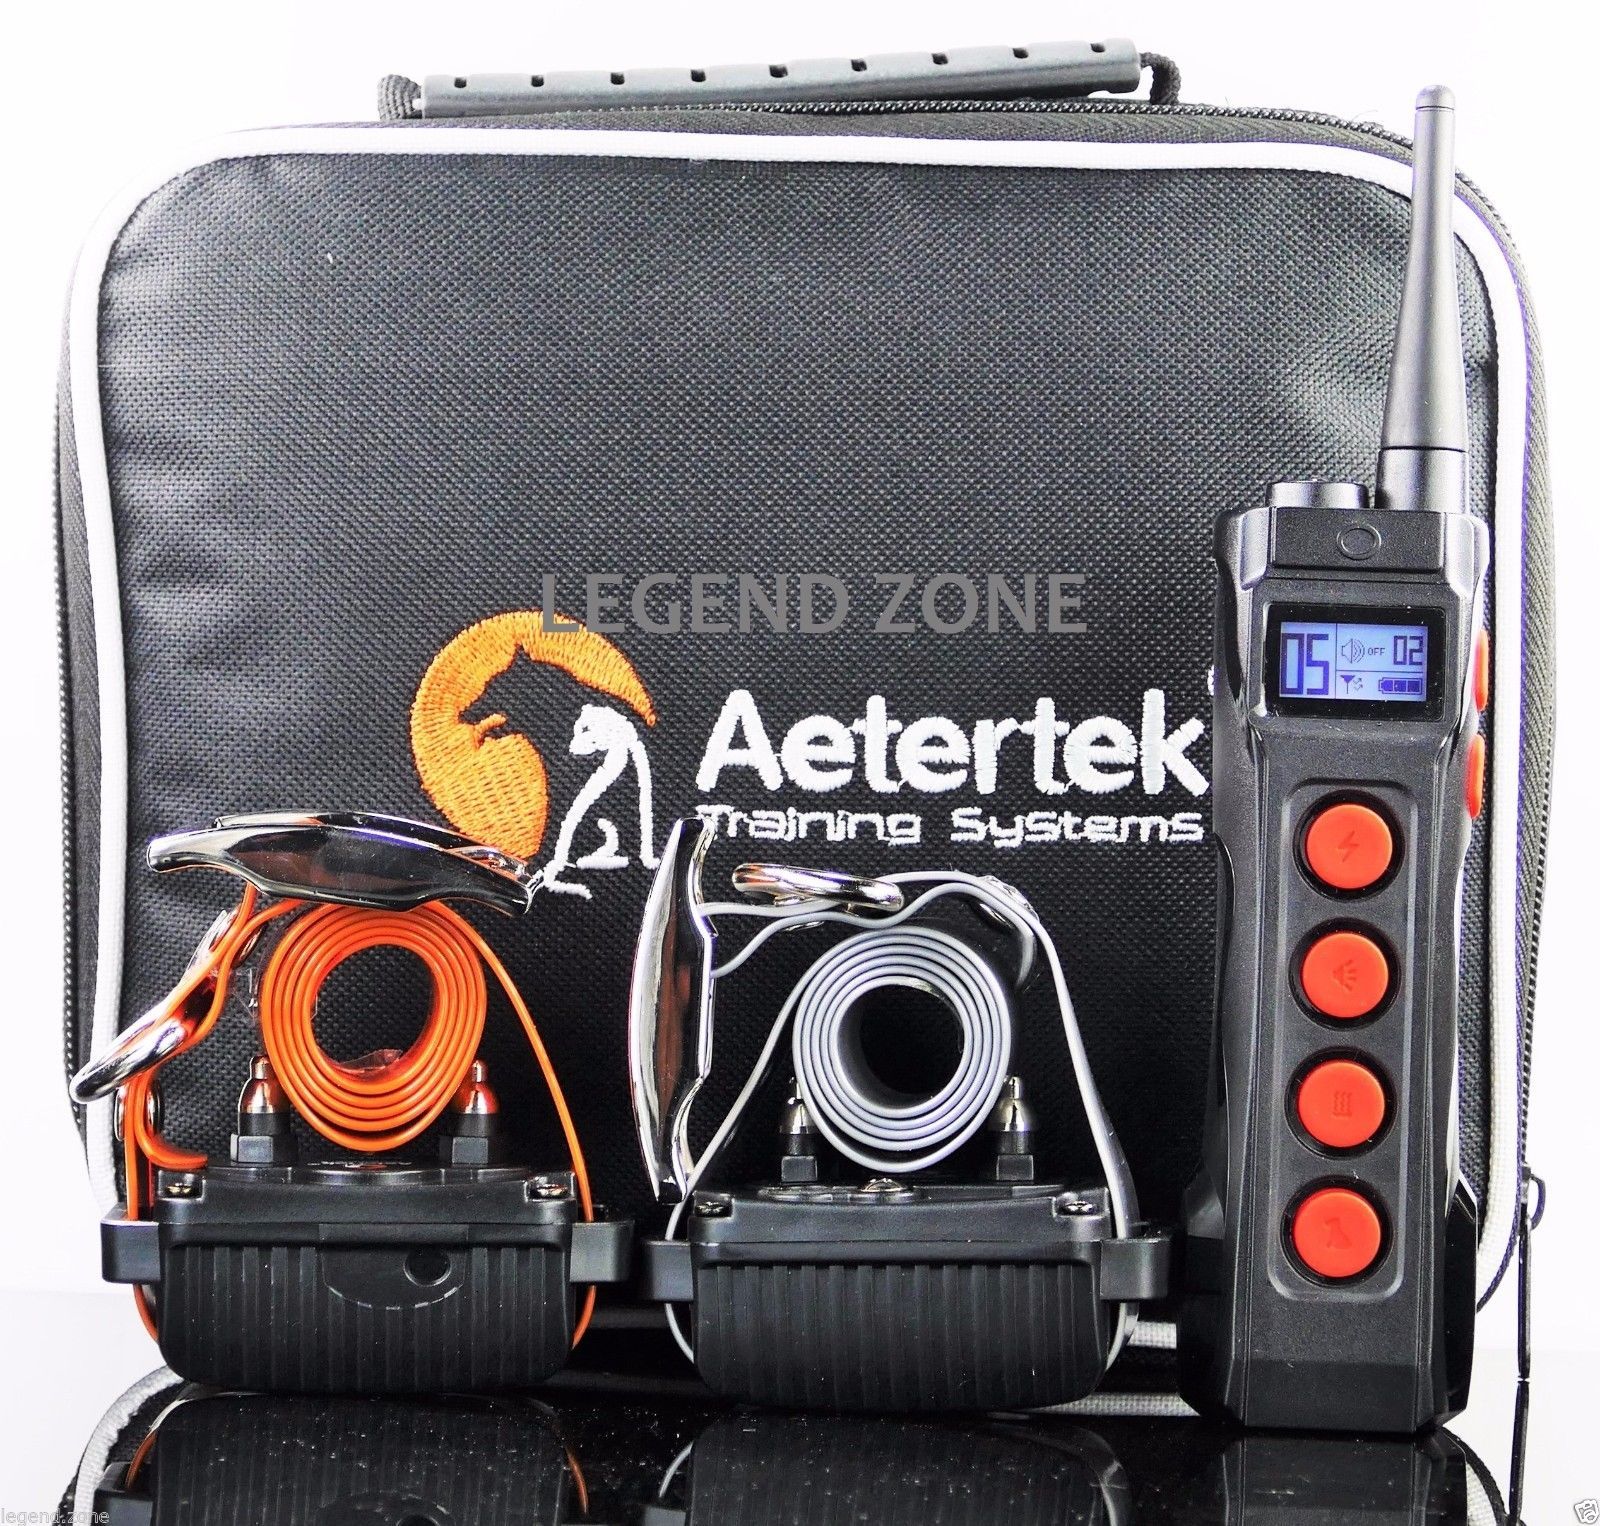 Aetertek 1000M Remote Dog Trainer Waterproof Shock Hunting Collar Auto Anti bark - $117.55